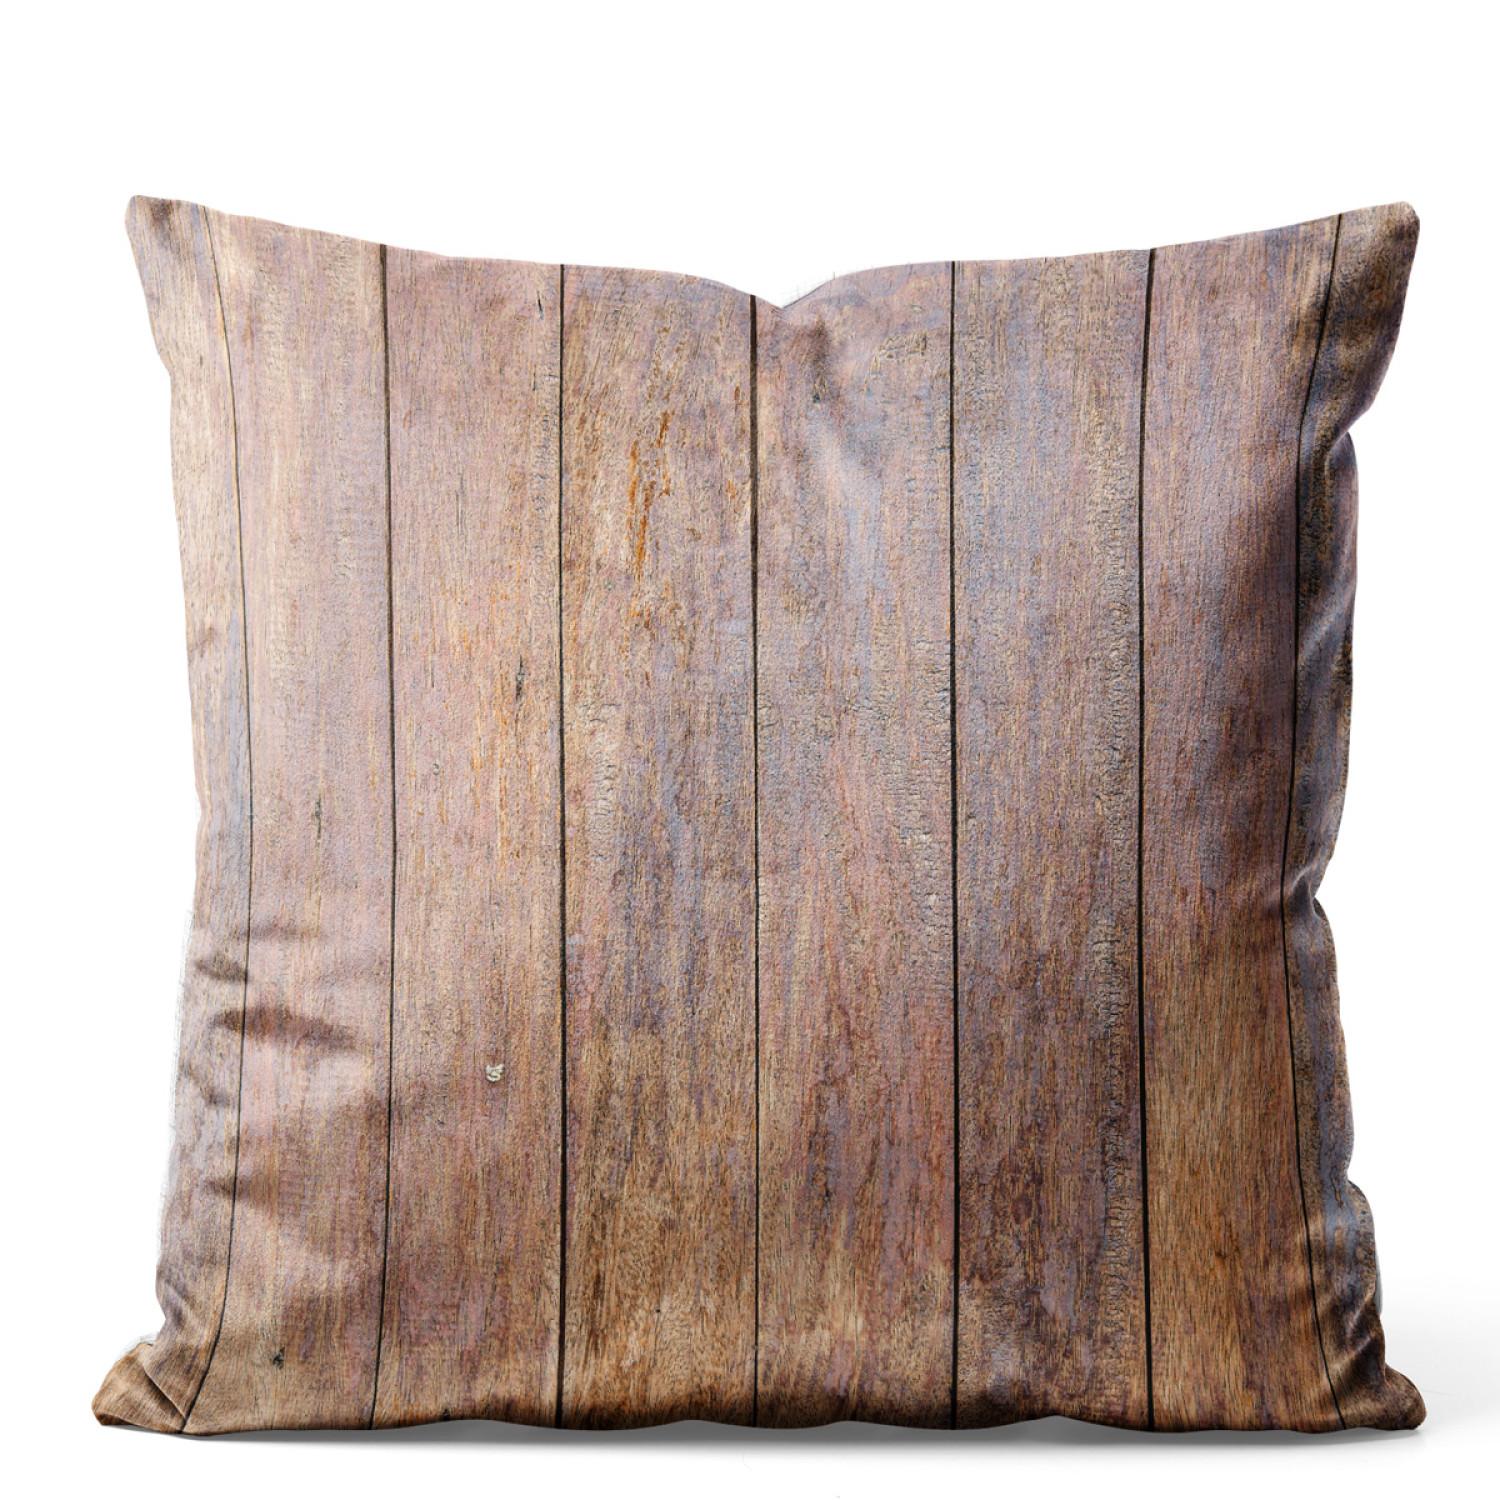 Decorative Velor Pillow Exotic wood - pattern imitating plank texture